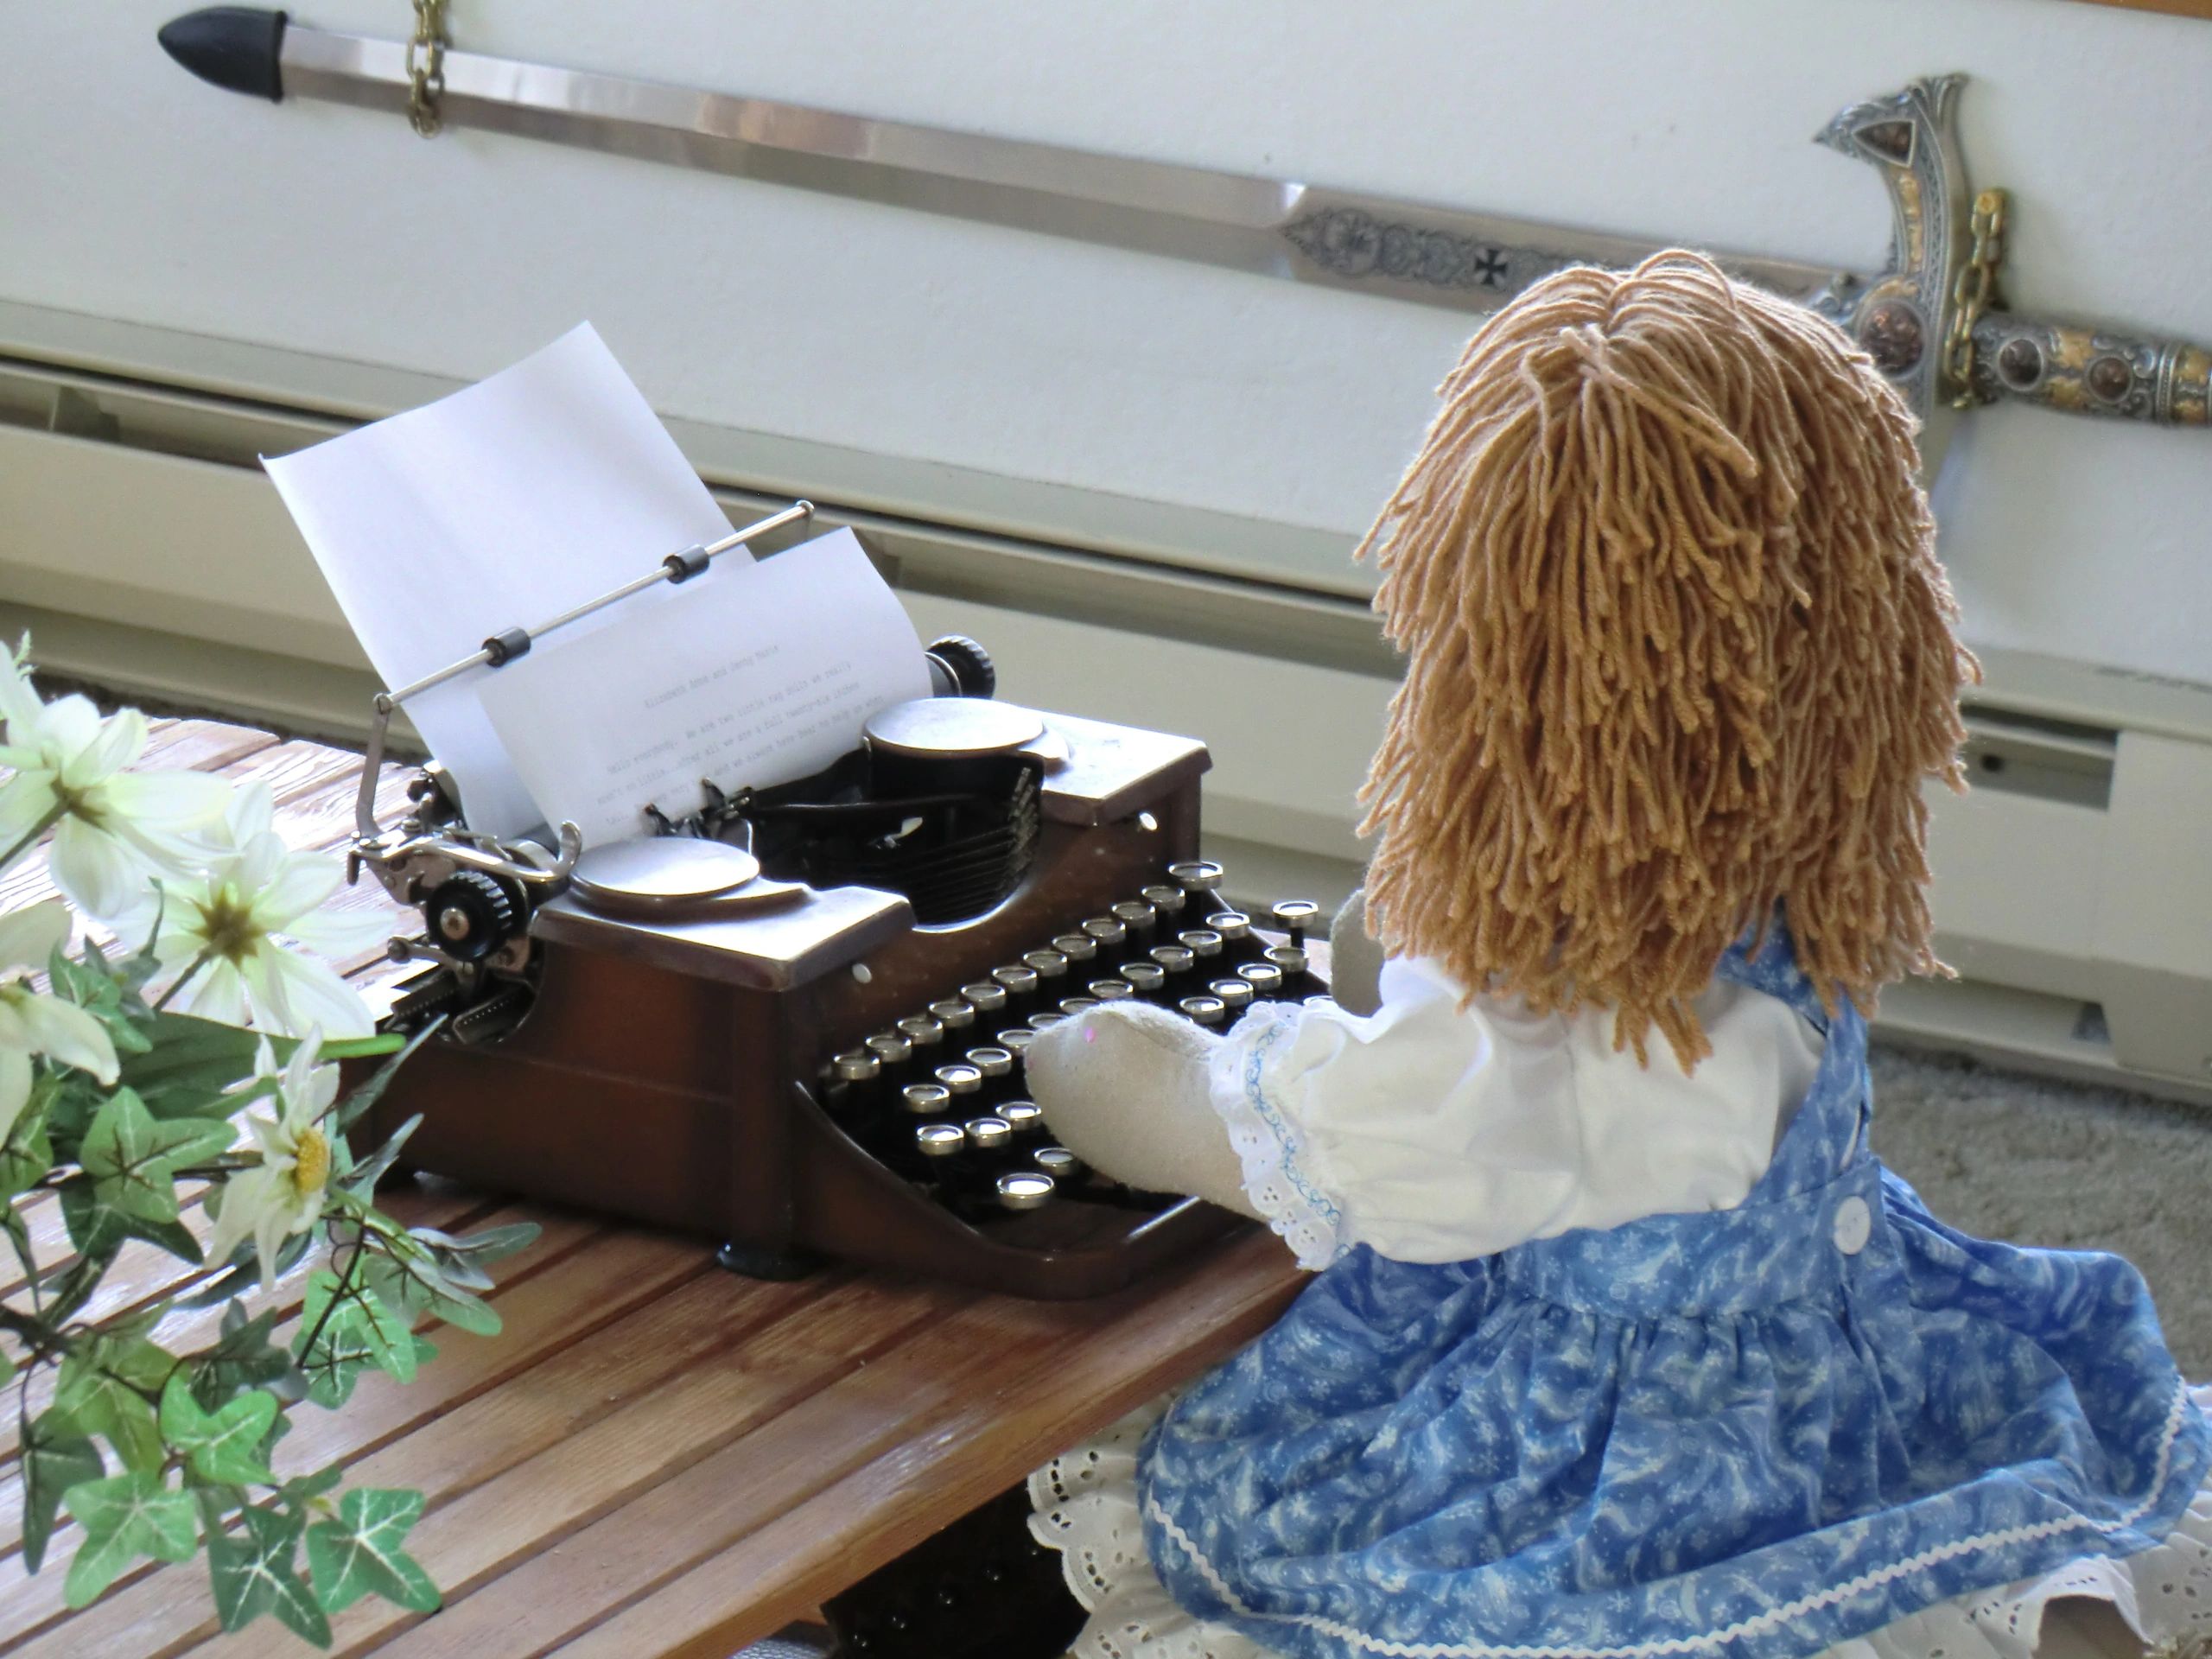 Elizabeth Anne on her grandmother's 1930's Royal typewriter.